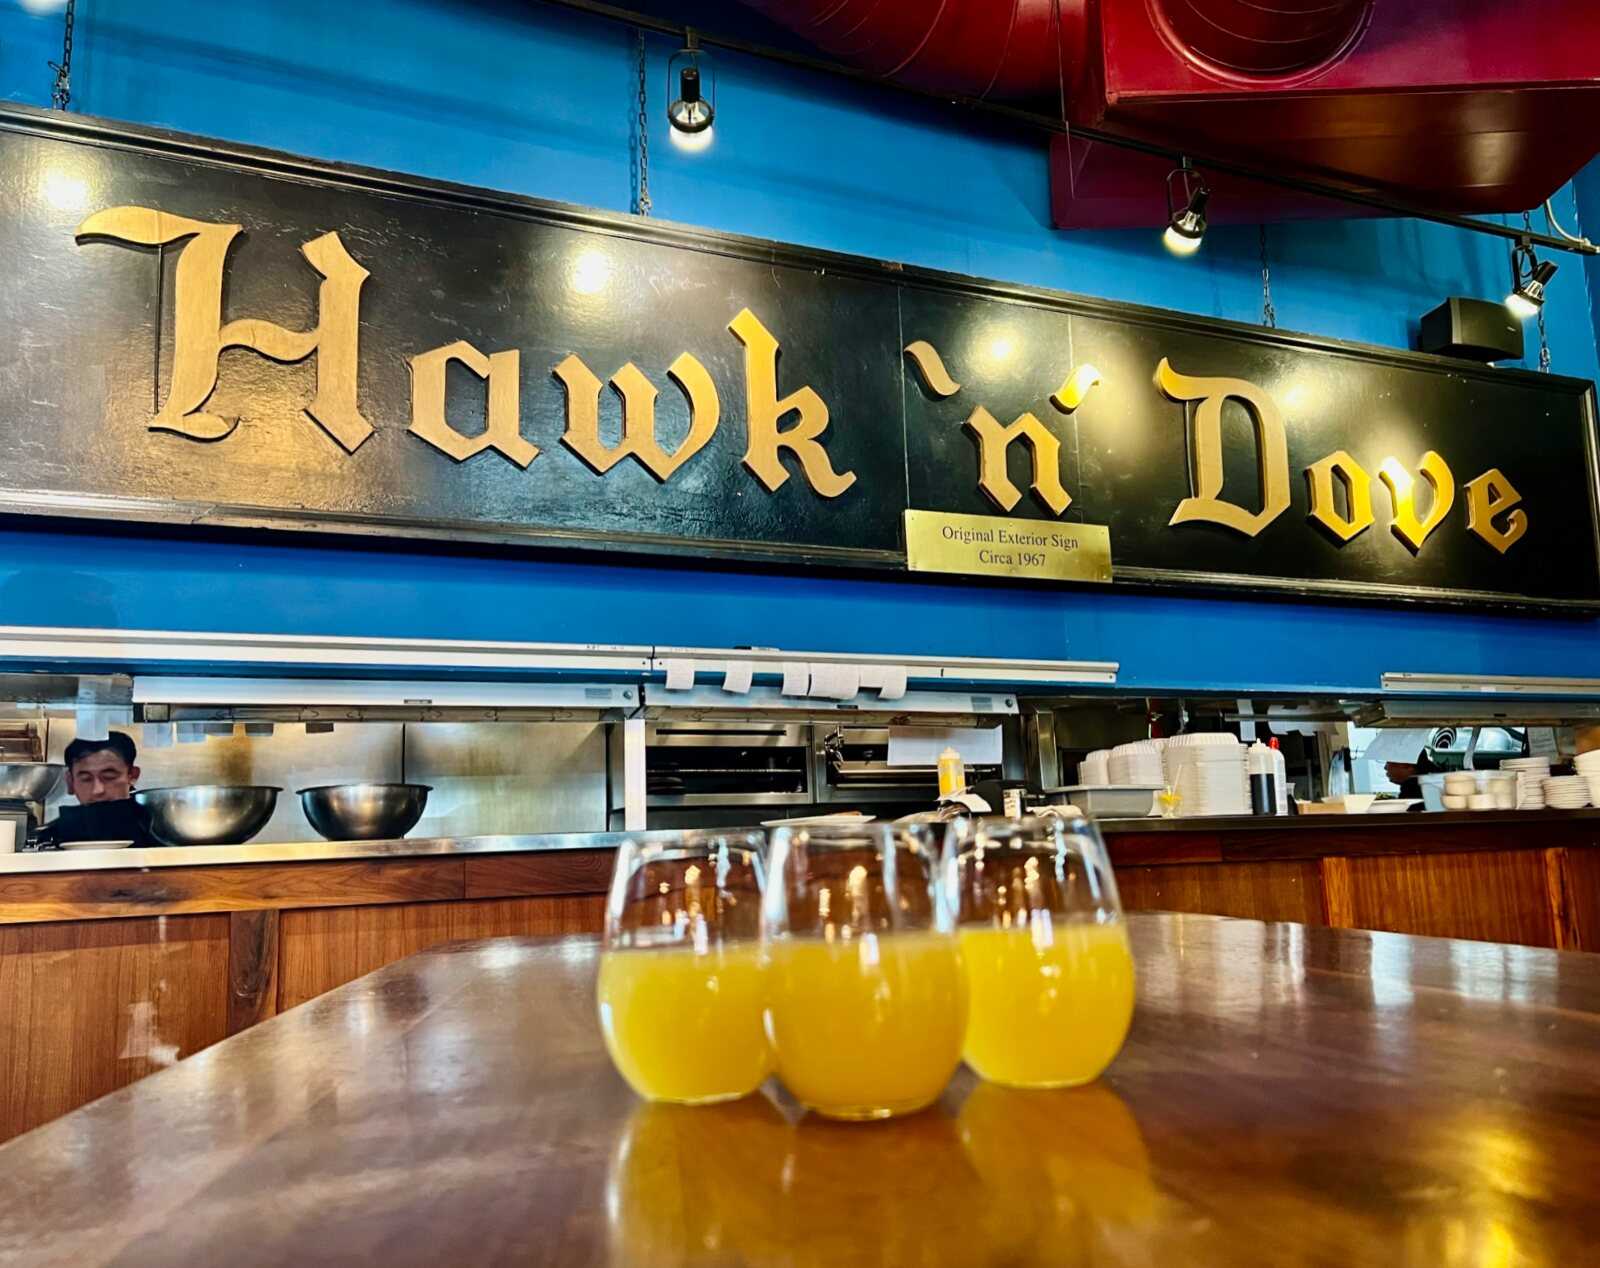 Hawk 'n' Dove Review